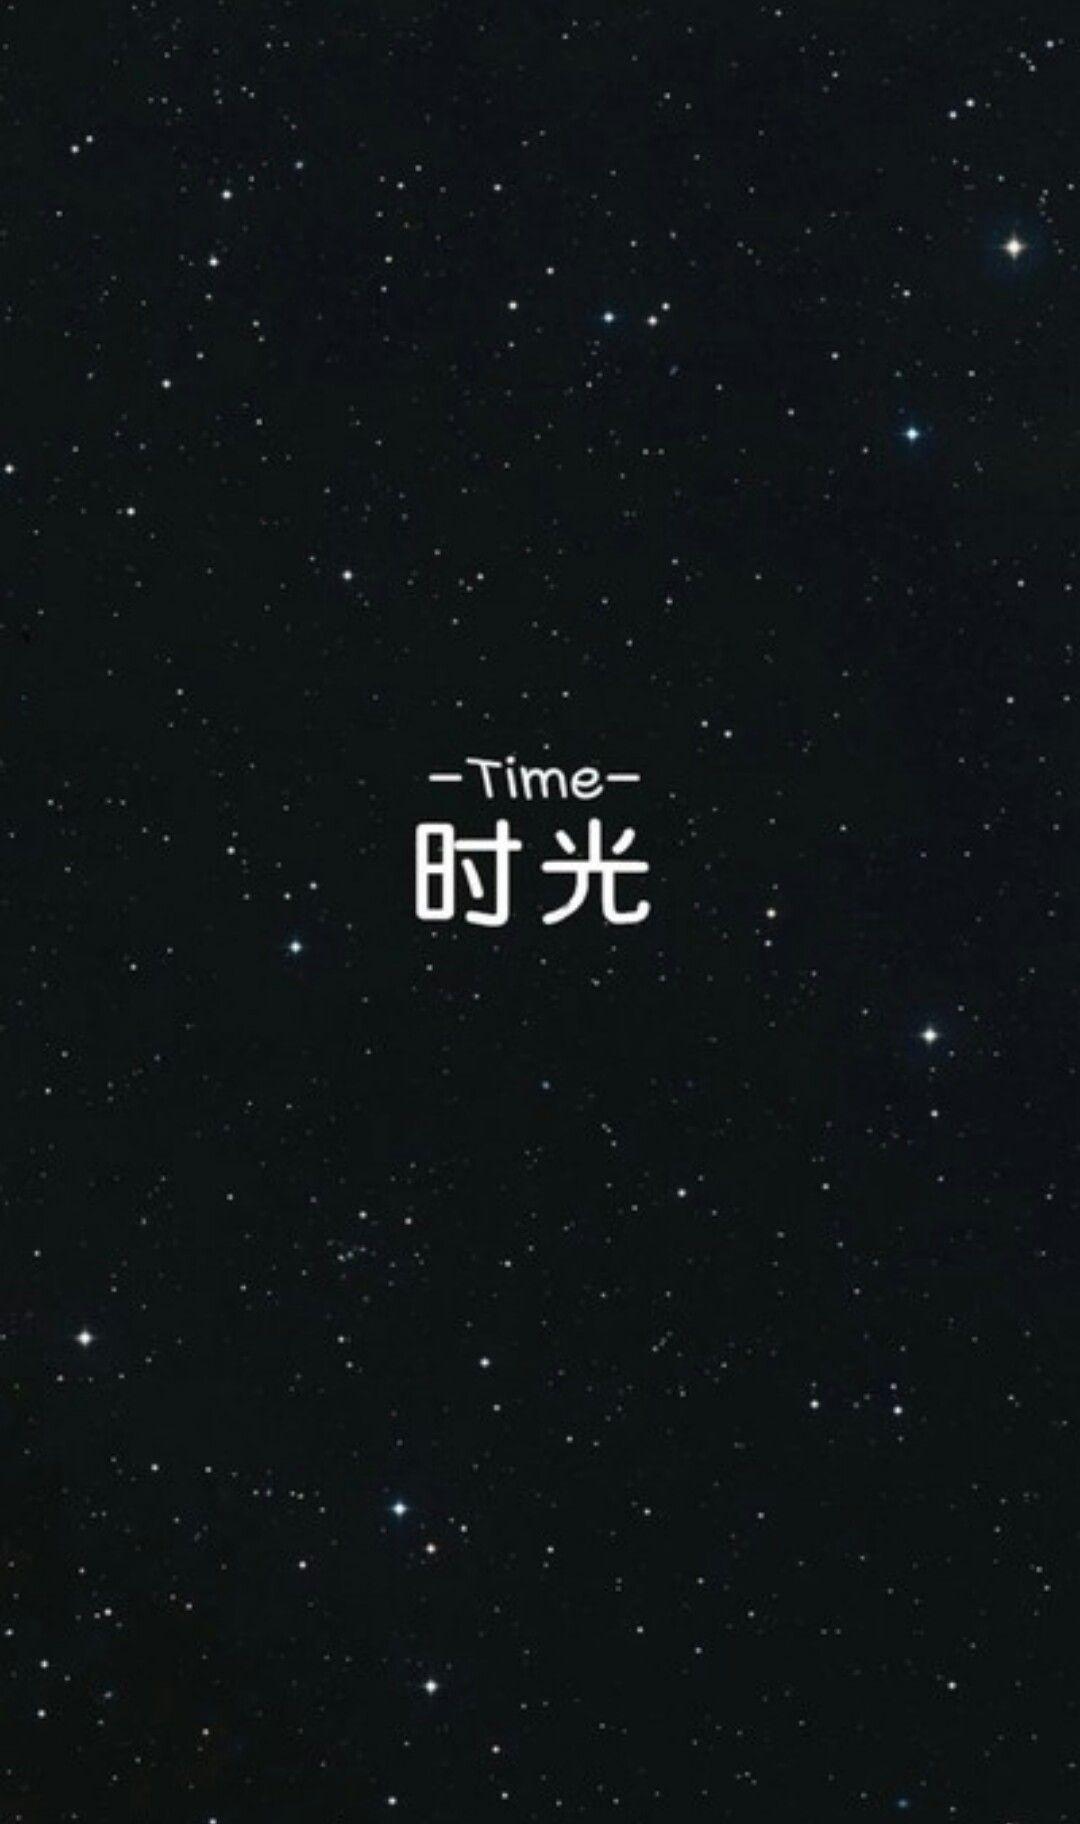 linaphat Stars Time Chinese Wallpaper. Chinese wallpaper, Black